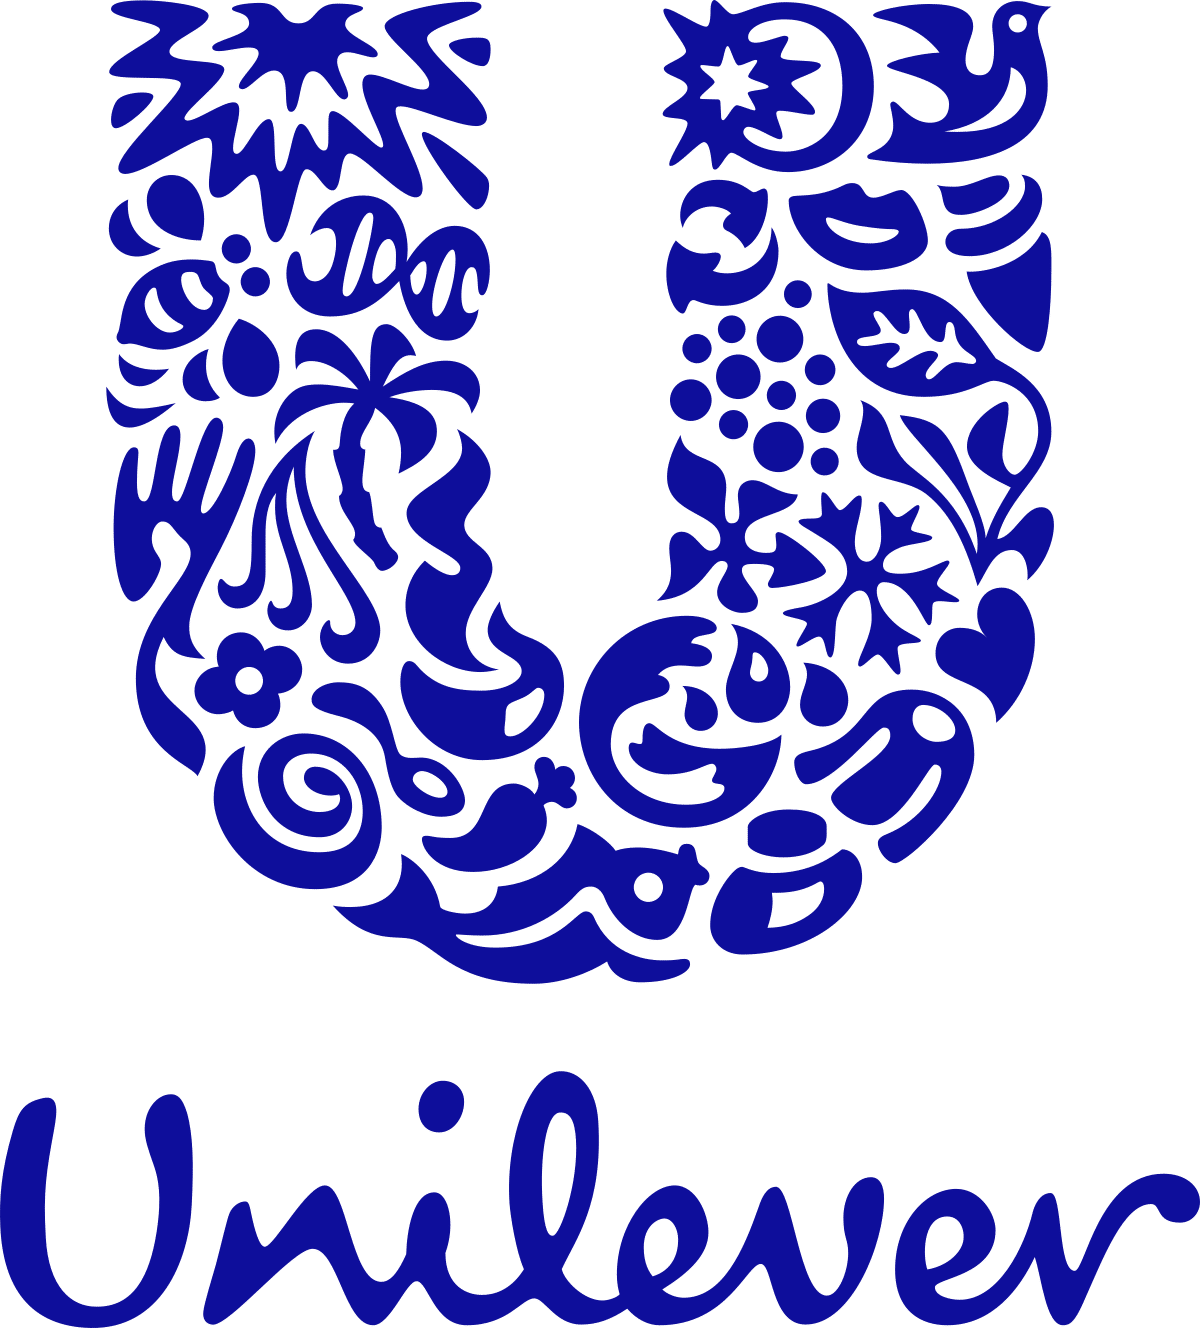 Unilever-logo